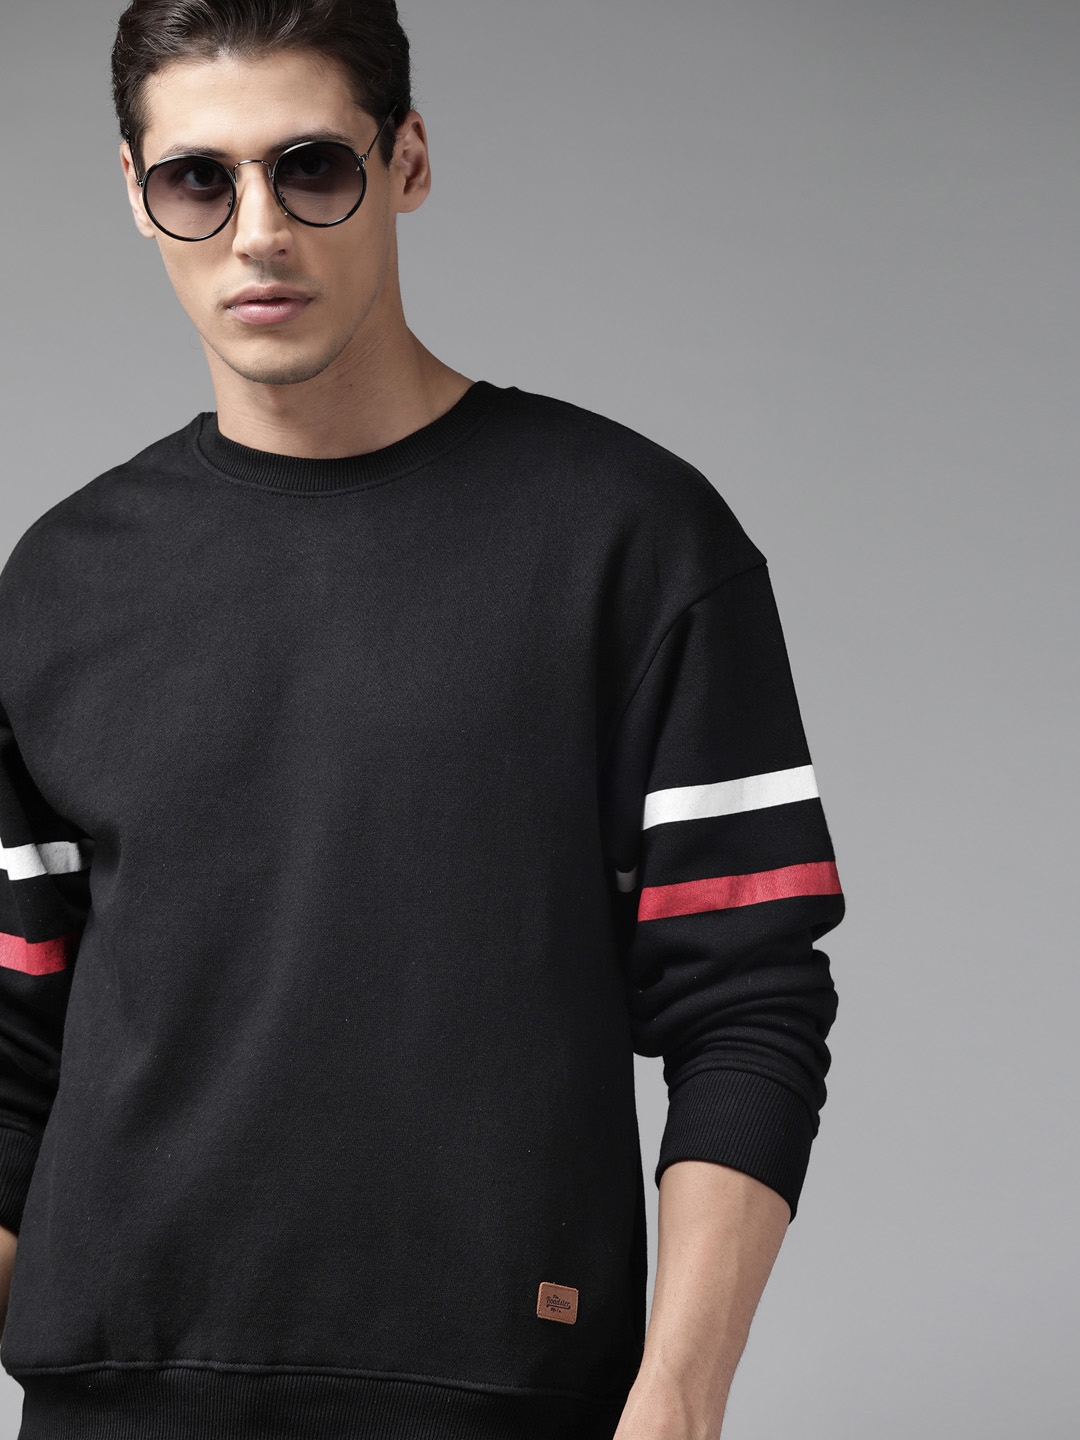 Roadster Men Black Solid Sweatshirt with Striped Sleeves